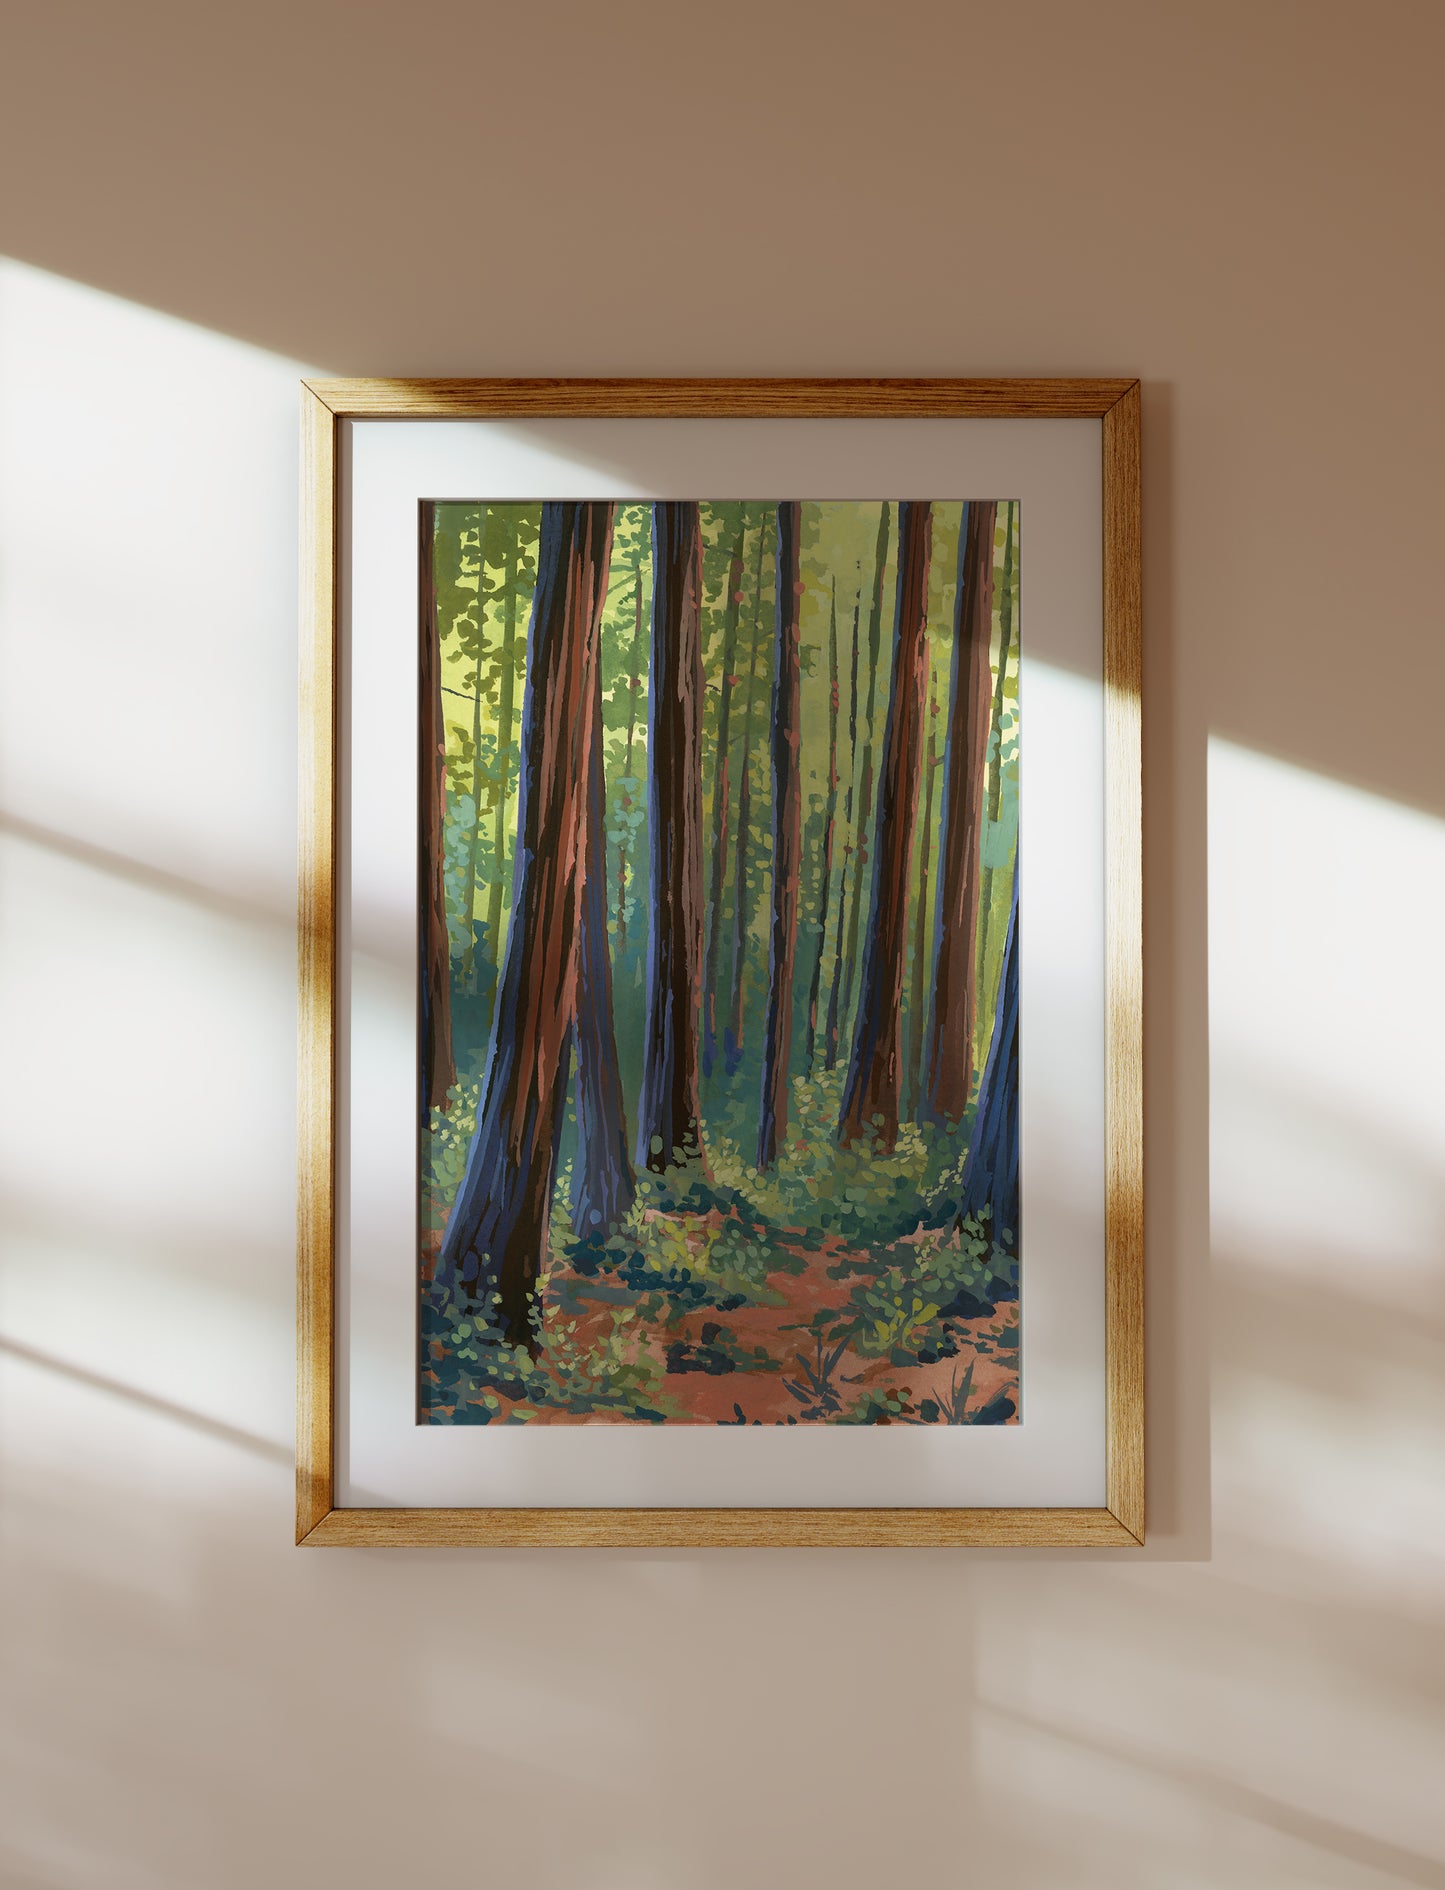 11x17 Framed Art print of redwood trees in California’s Muir Woods National Monument.